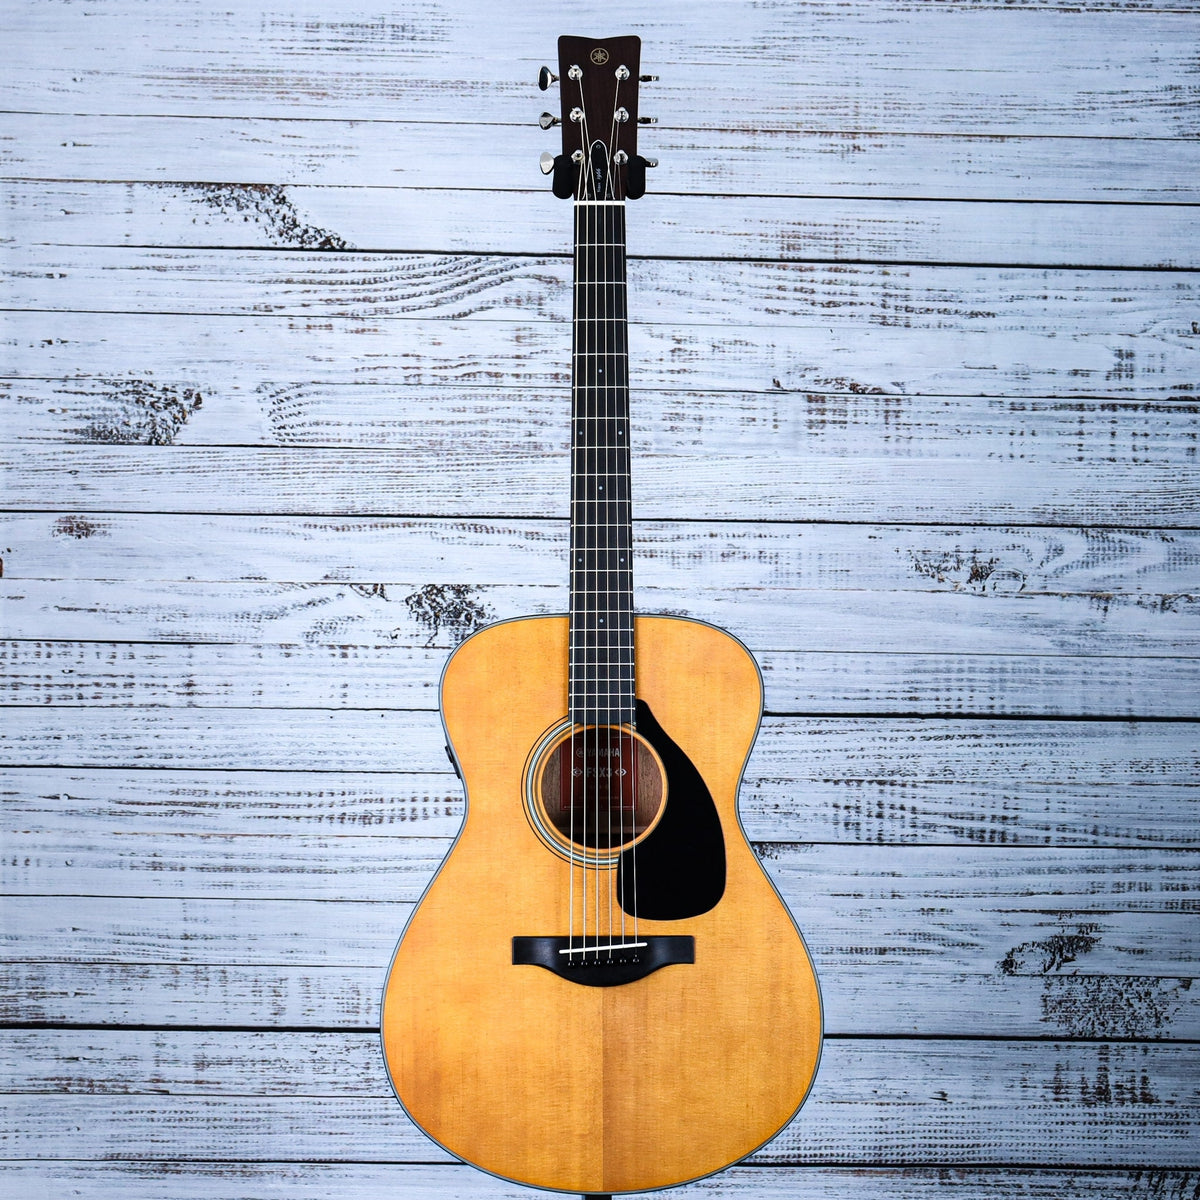 Yamaha FSX3 Concert Acoustic Guitar